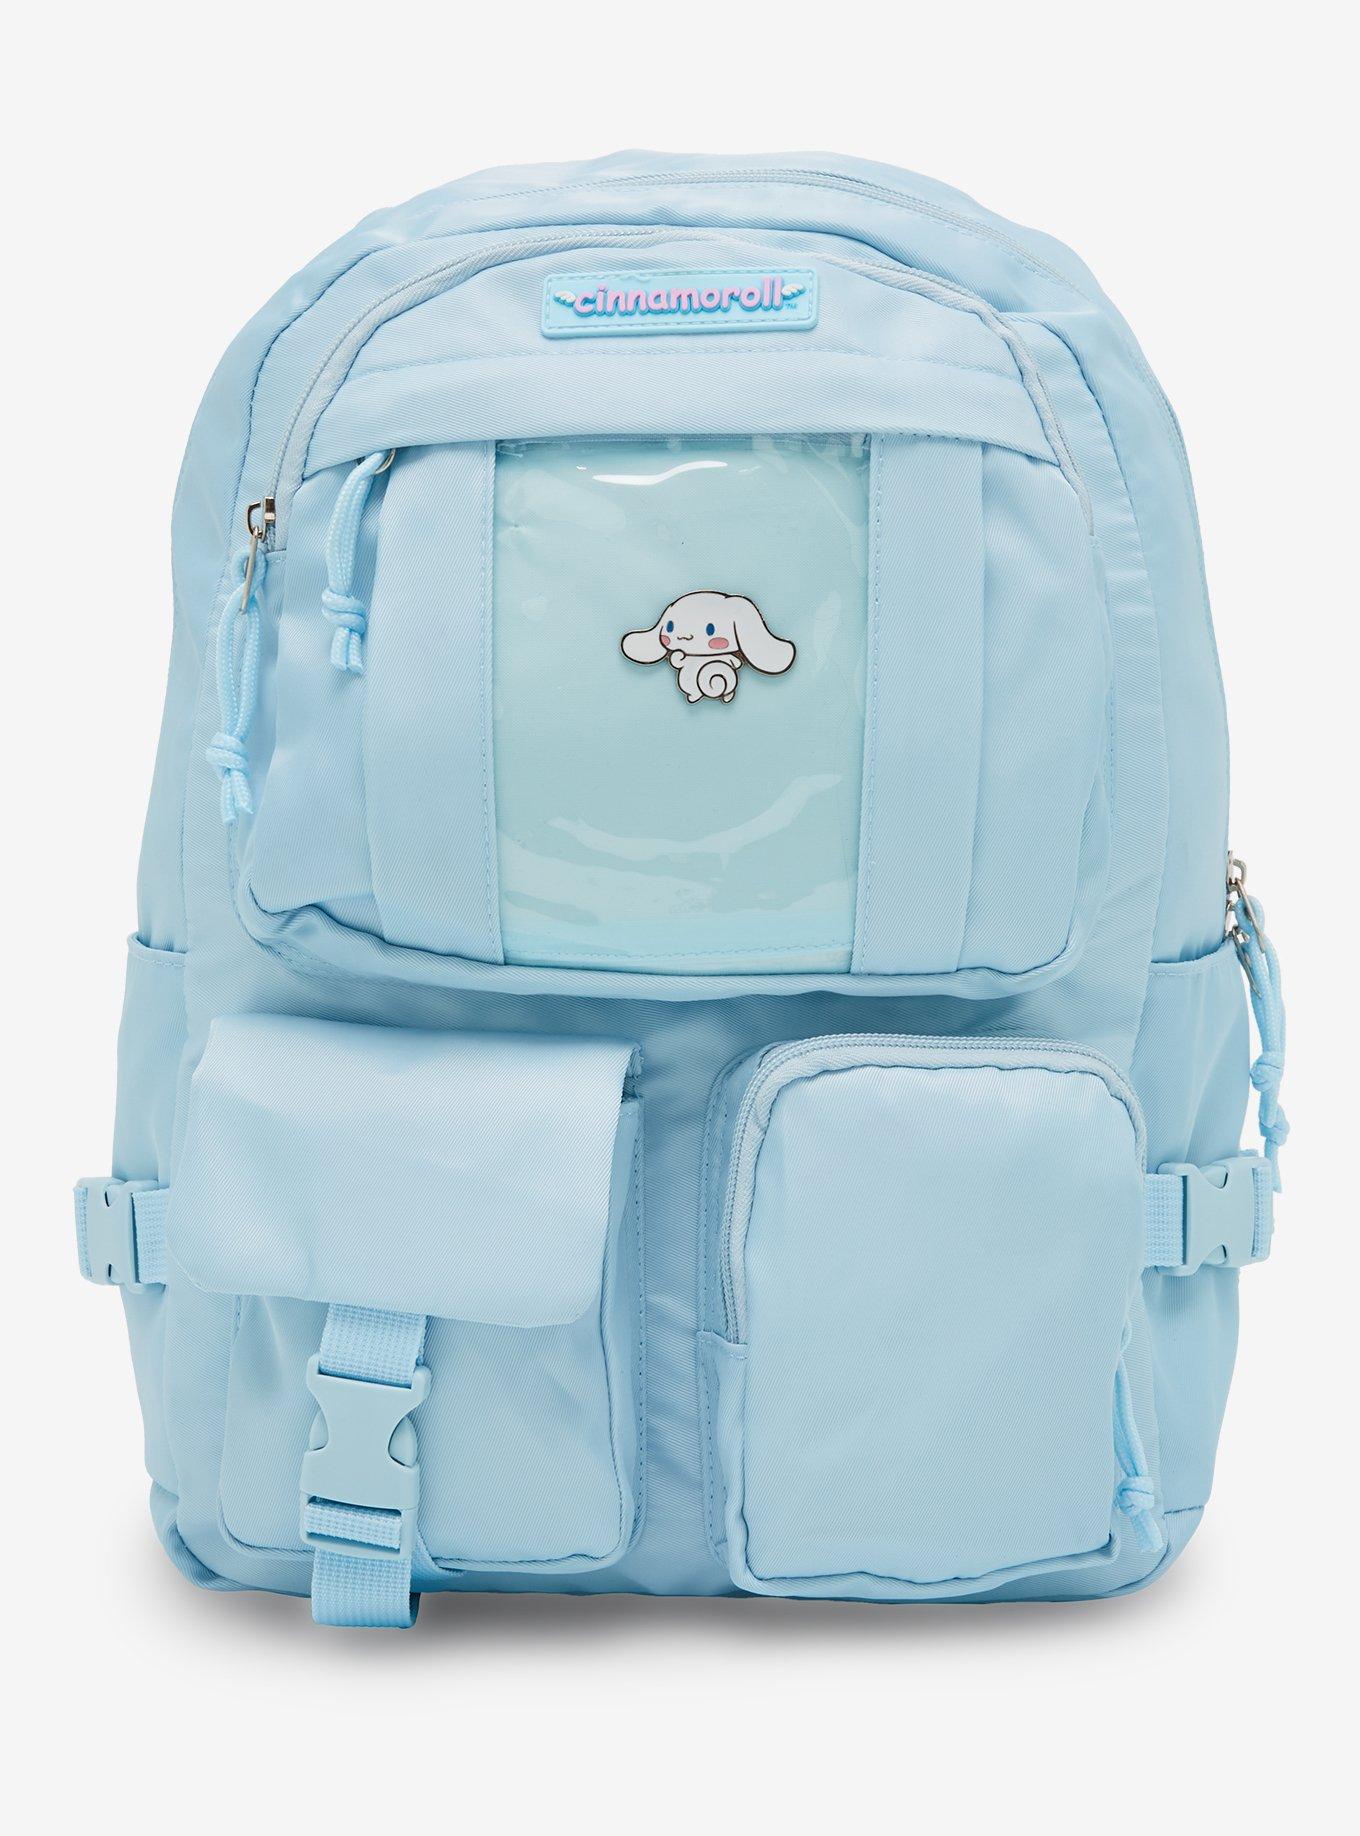 Disney Lilo & Stitch Girls' 5-Piece Backpack Lunchbox Set - Blue/Multi, One Size